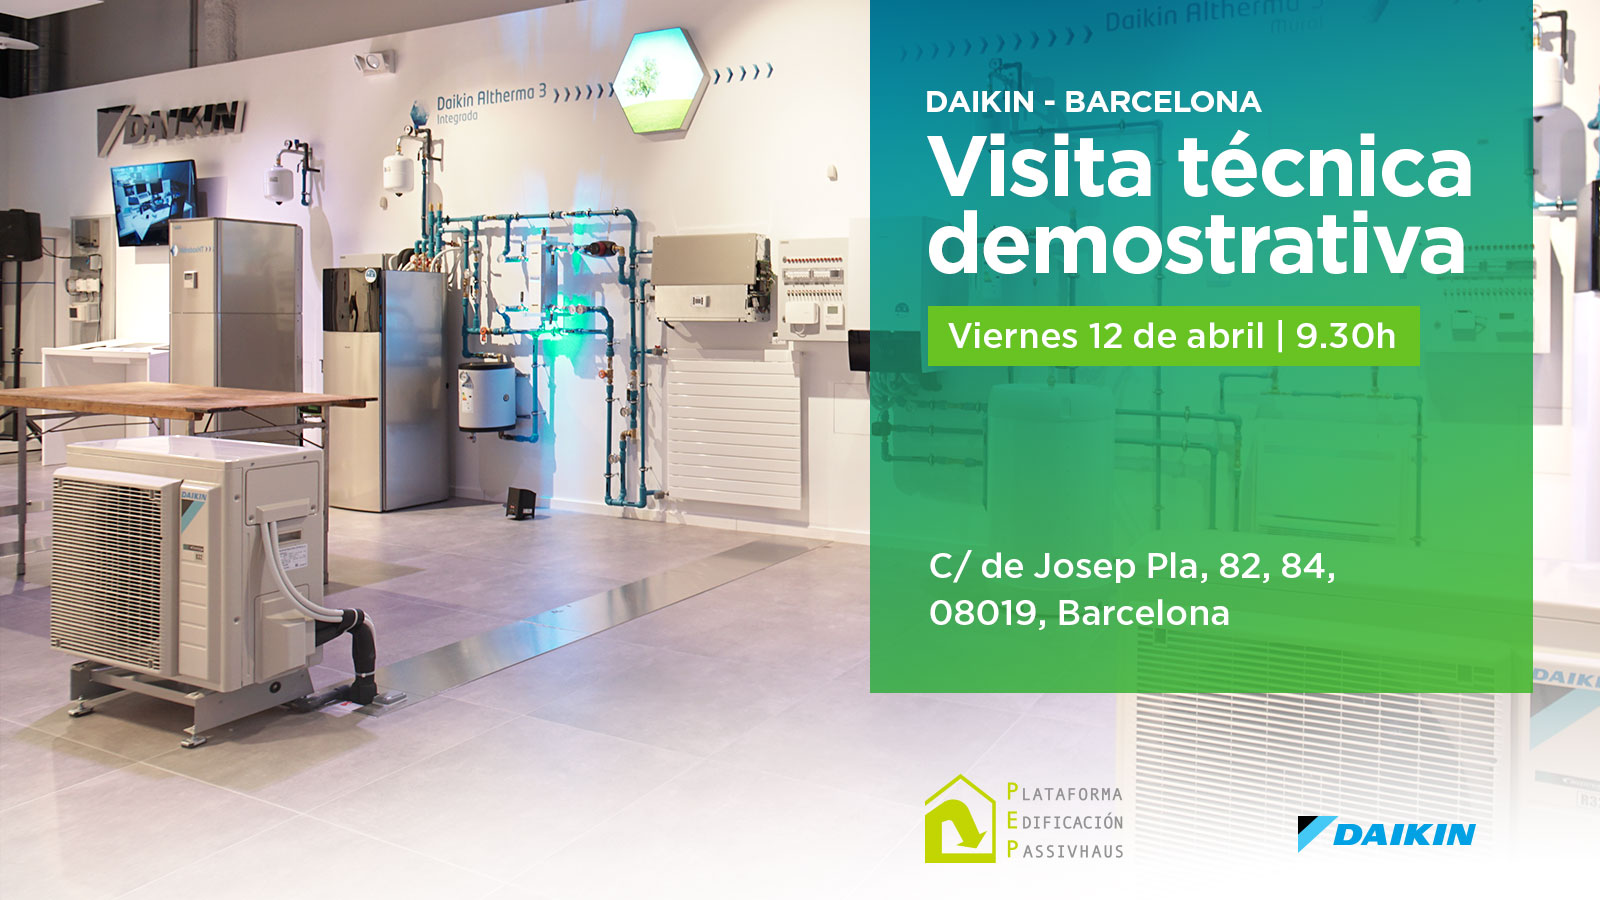 Visita Técnica demostrativa. Daikin - Barcelona